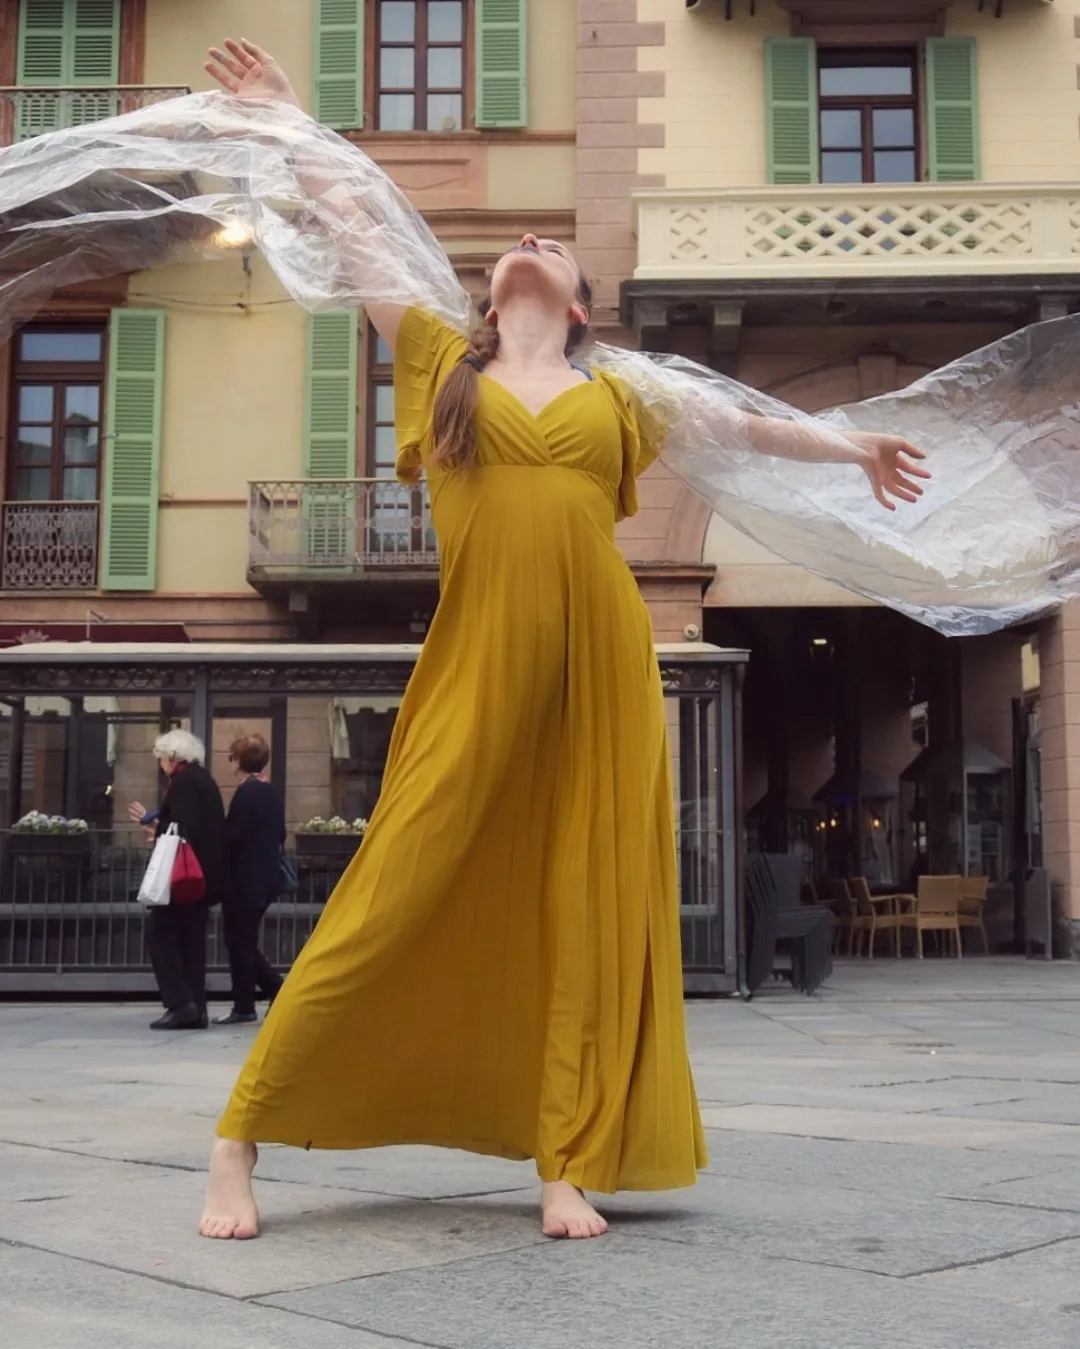 cellophane DANCE   italiandancer portrait shooting